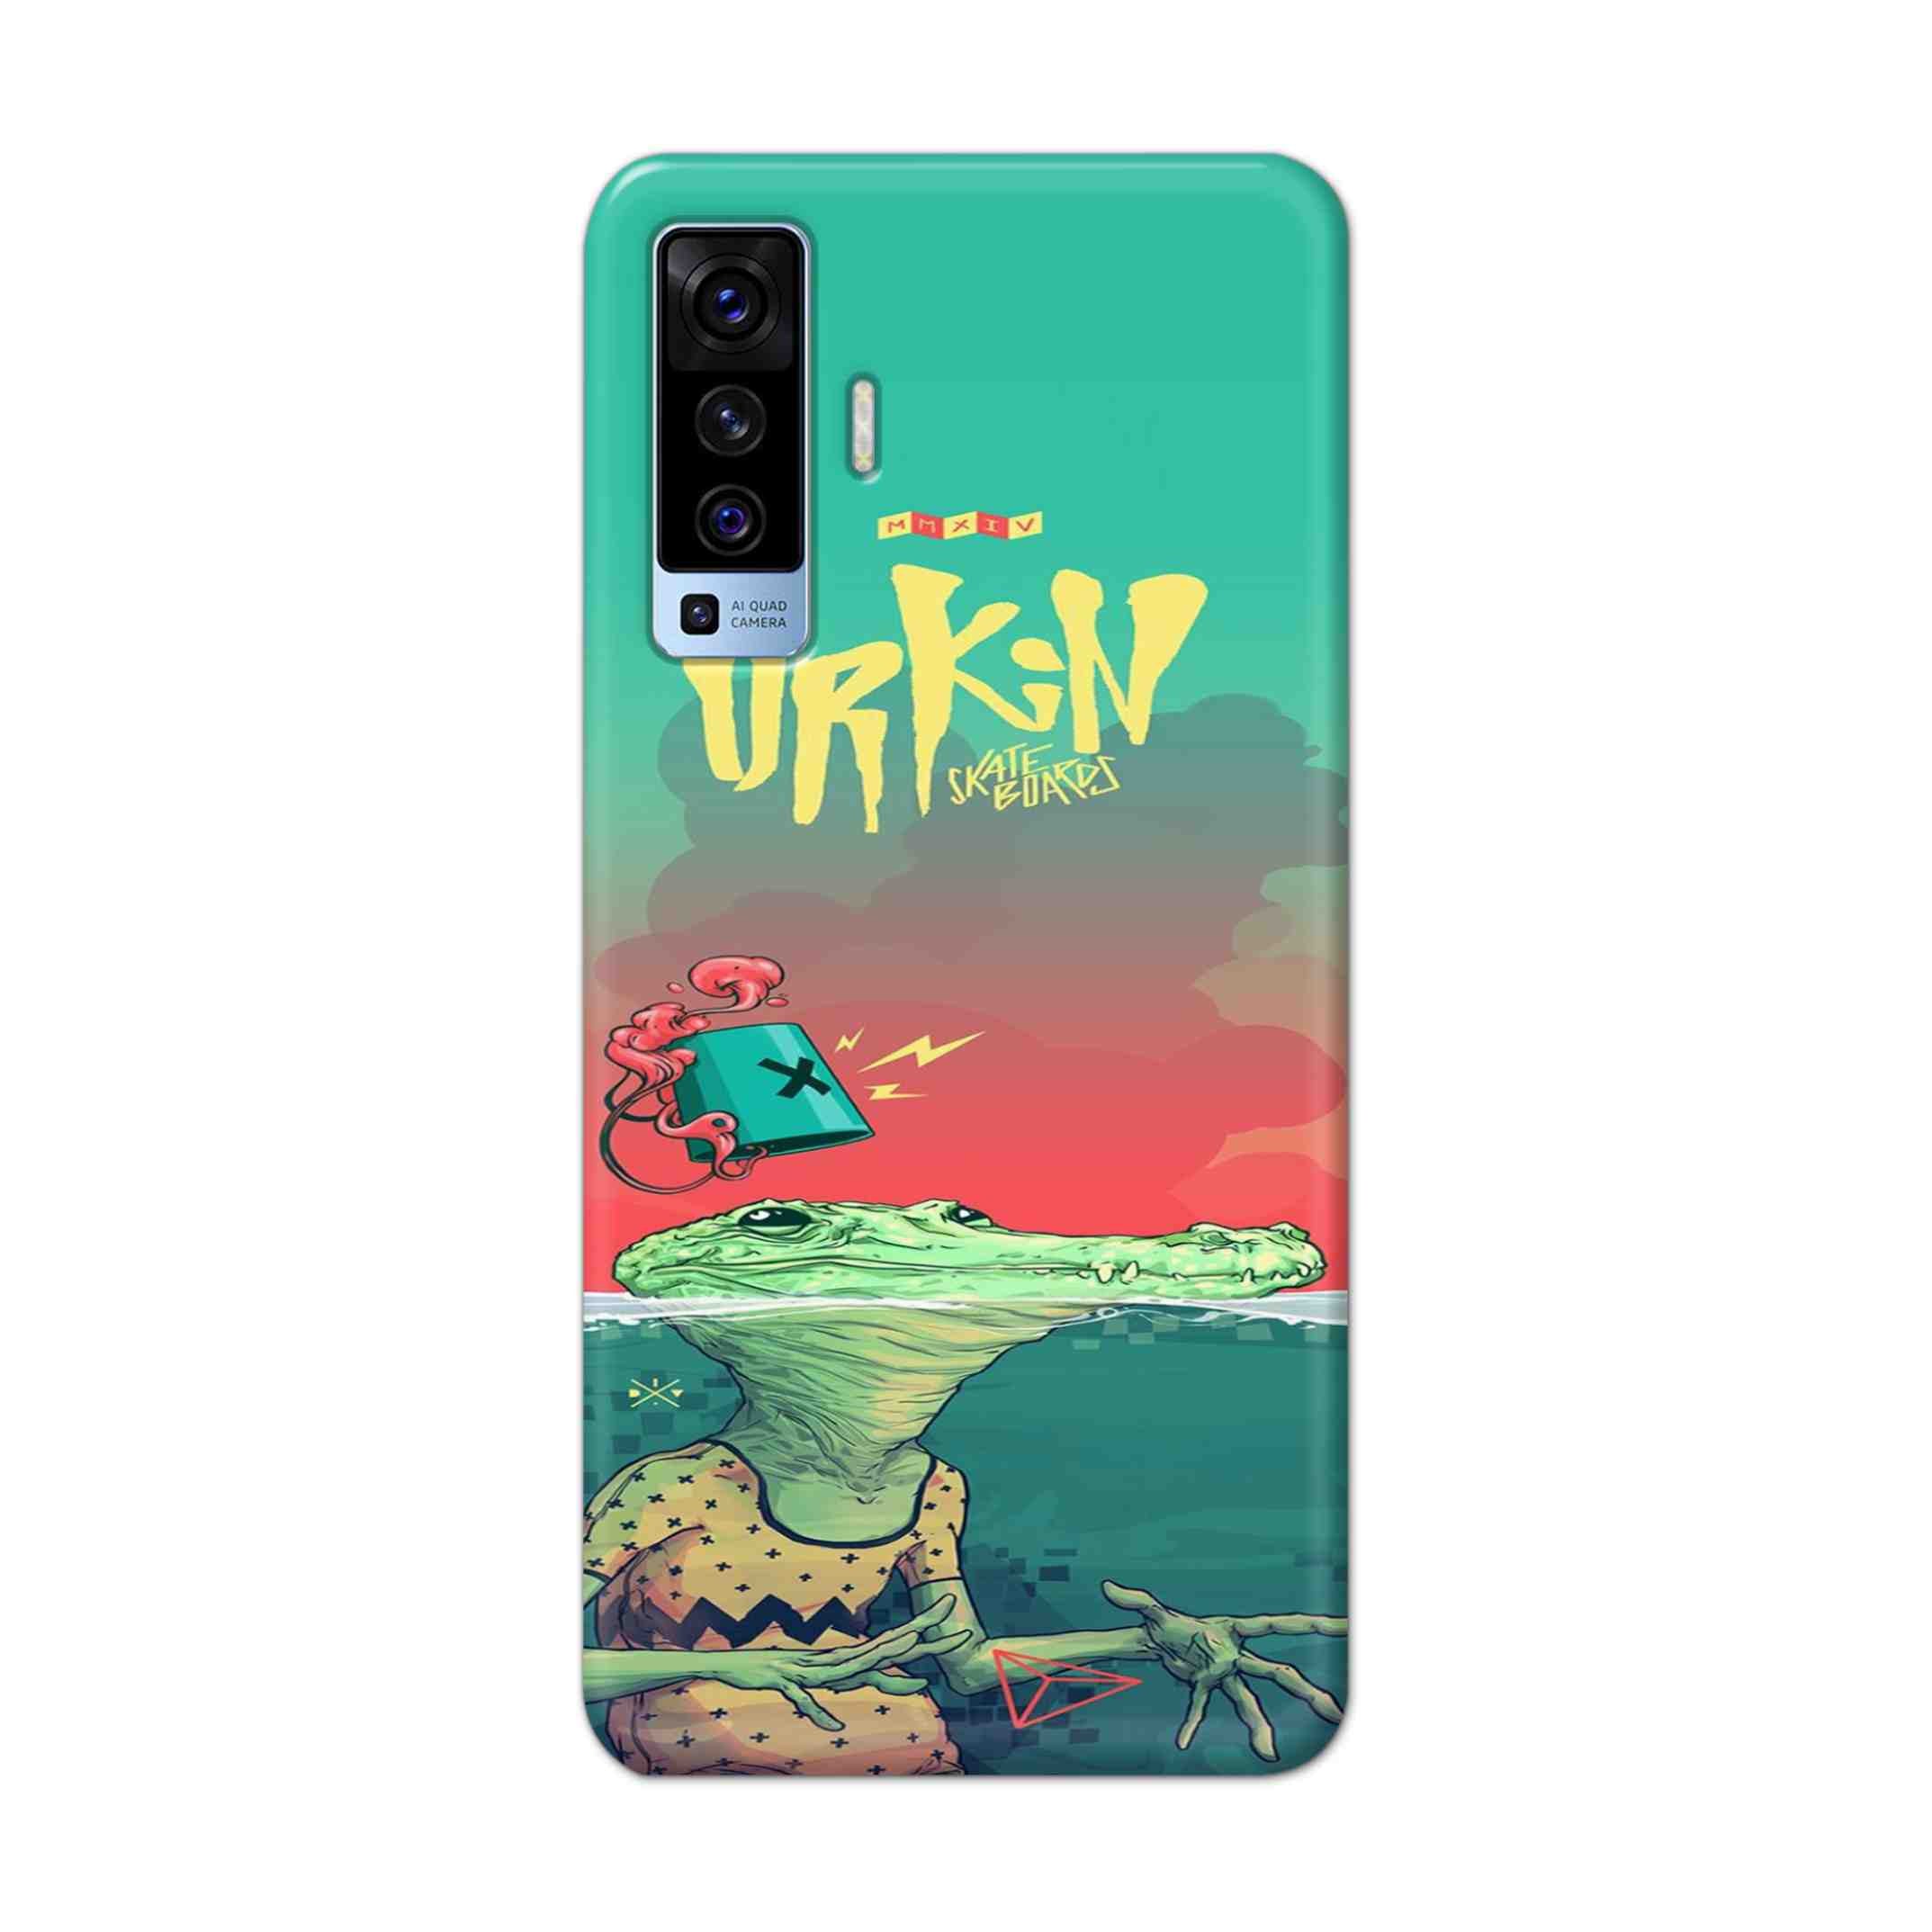 Buy Urkin Hard Back Mobile Phone Case Cover For Vivo X50 Online